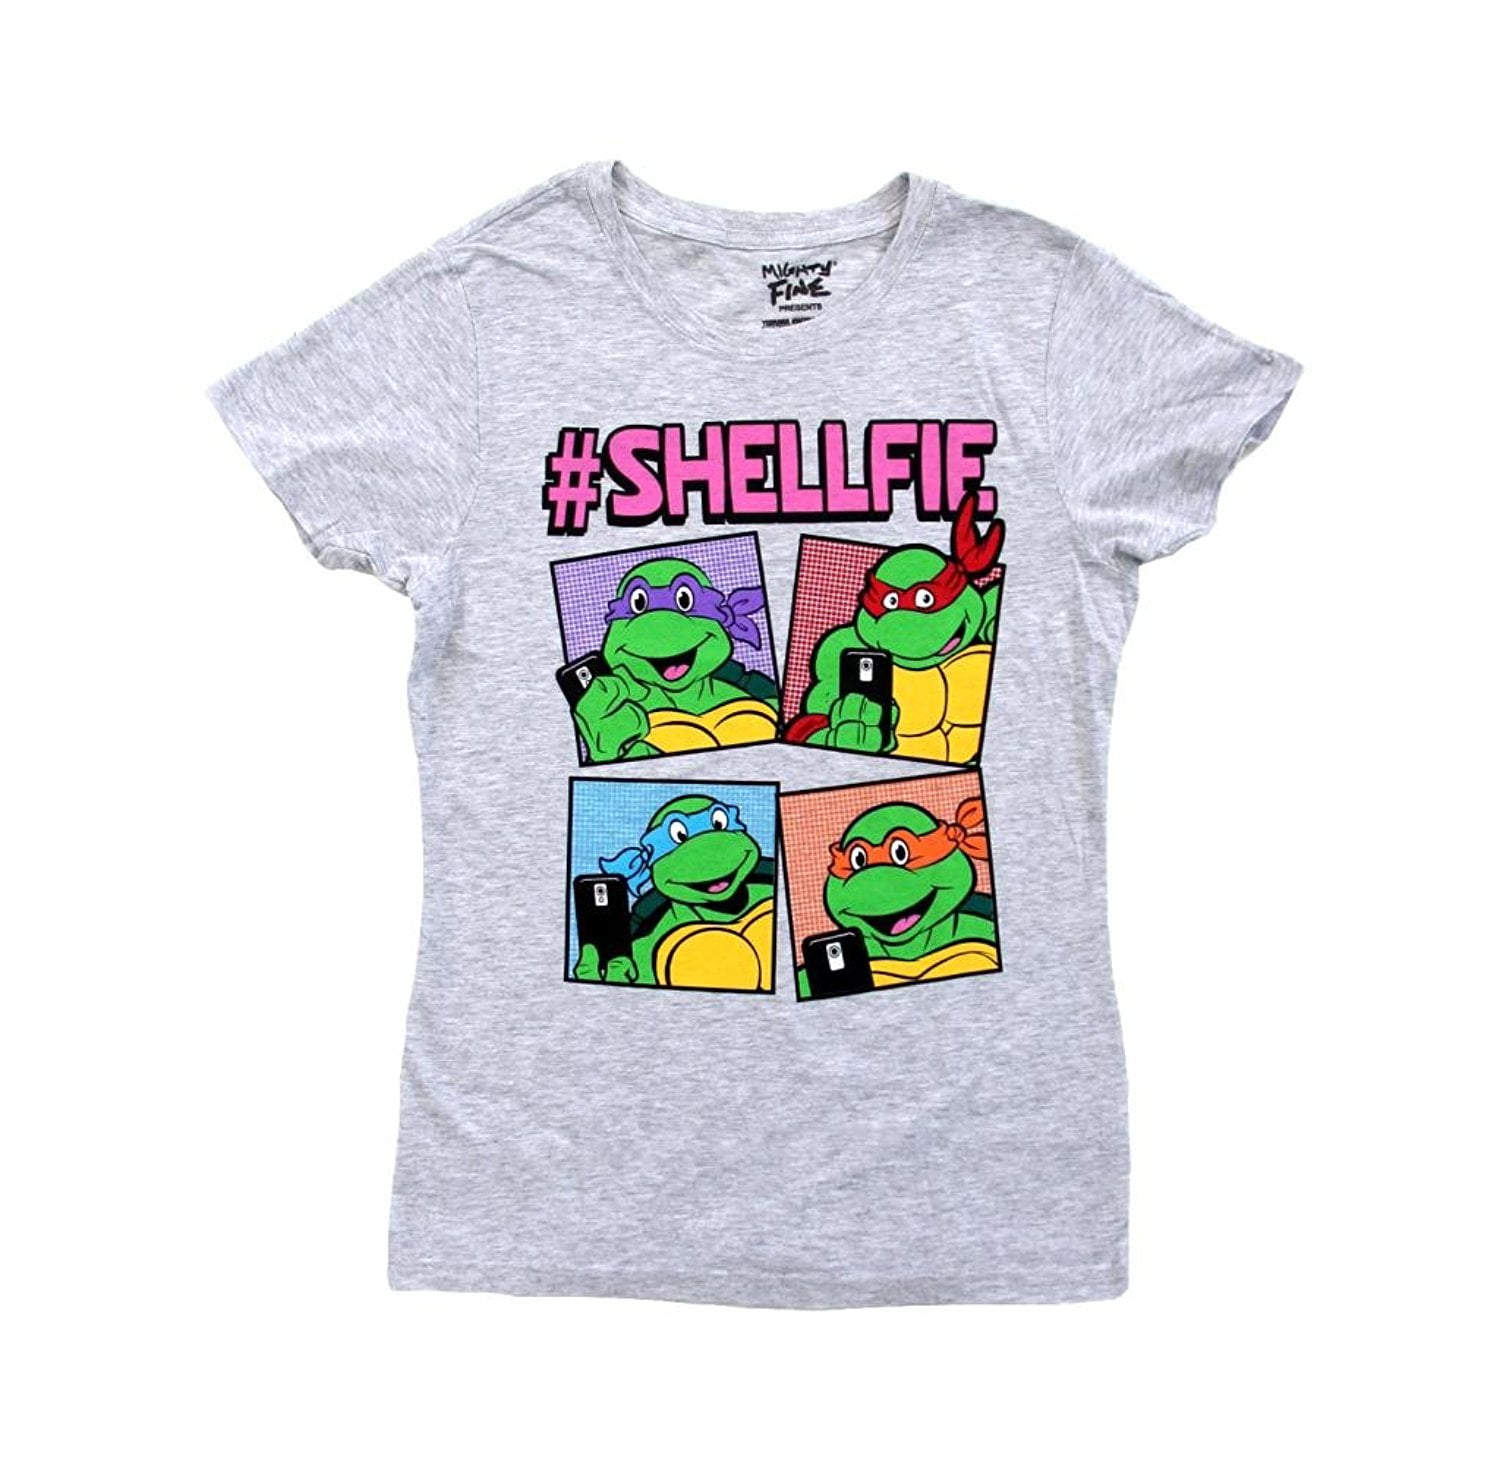 Teenage Mutant Ninja Turtles Boxes Shellfie Juniors T-Shirt - Walmart.com